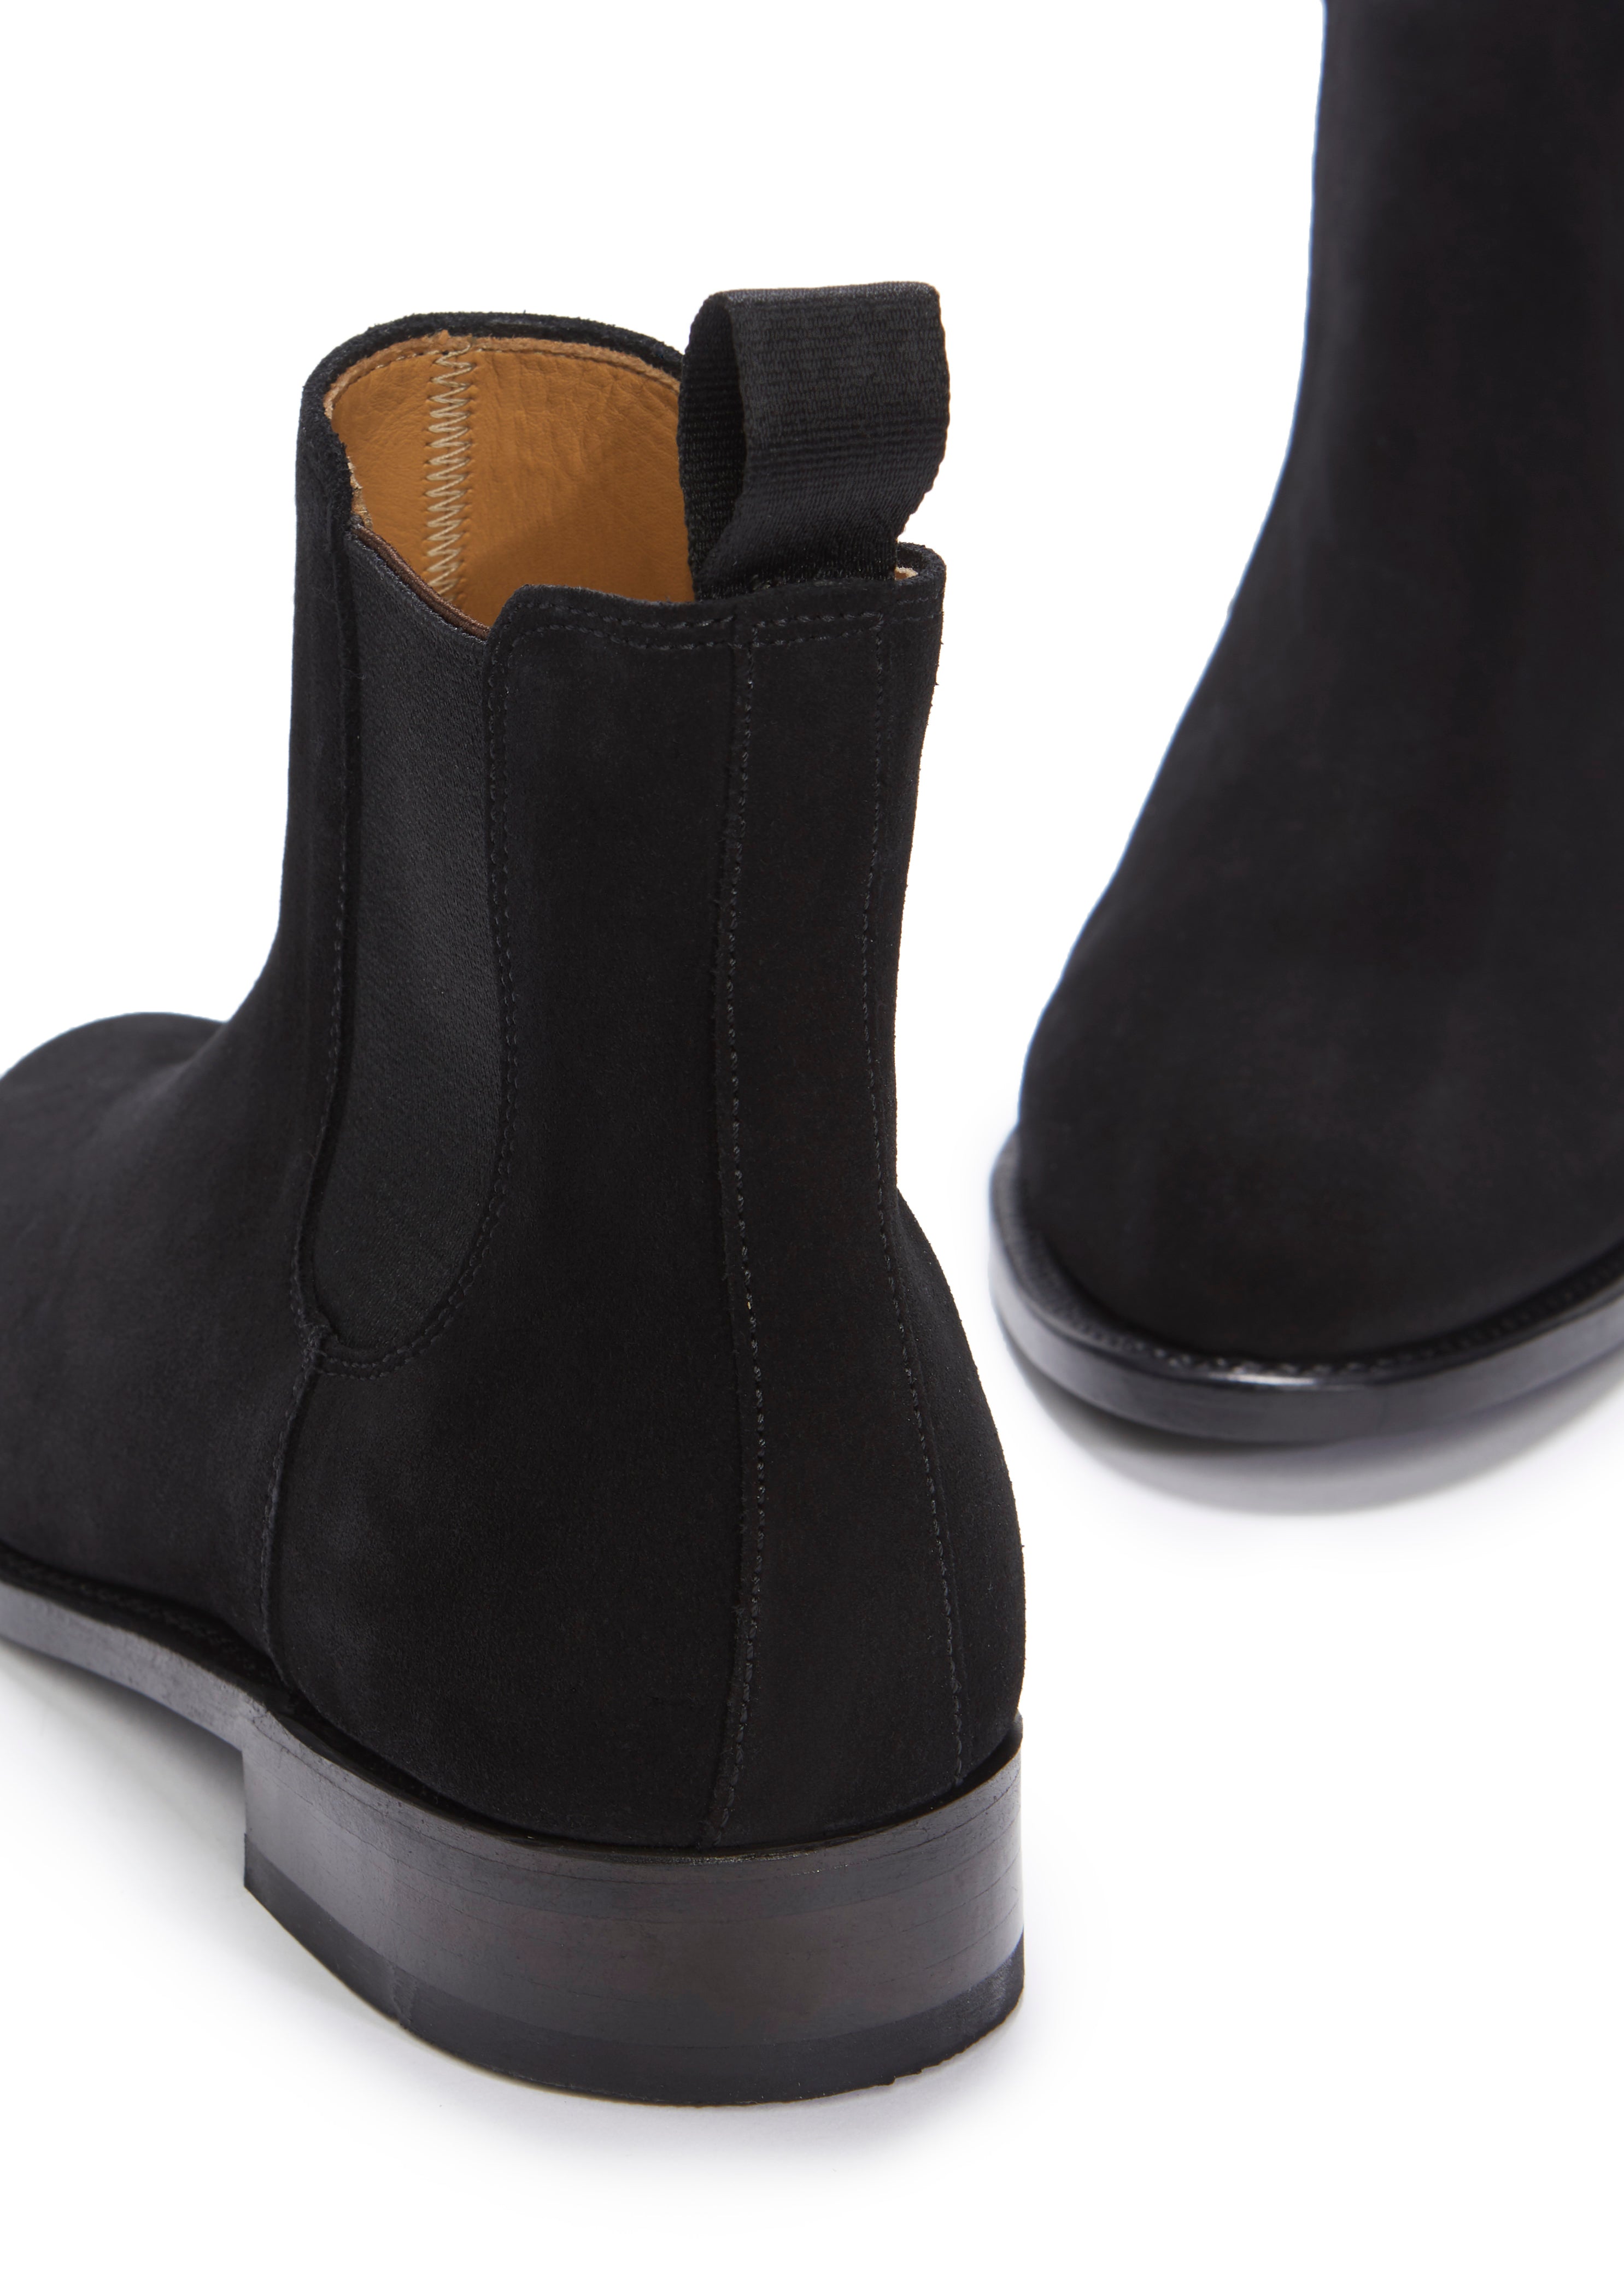 ordlyd leder Tanke Women's Black Suede Chelsea Boots, Welted Leather Sole - Hugs & Co.